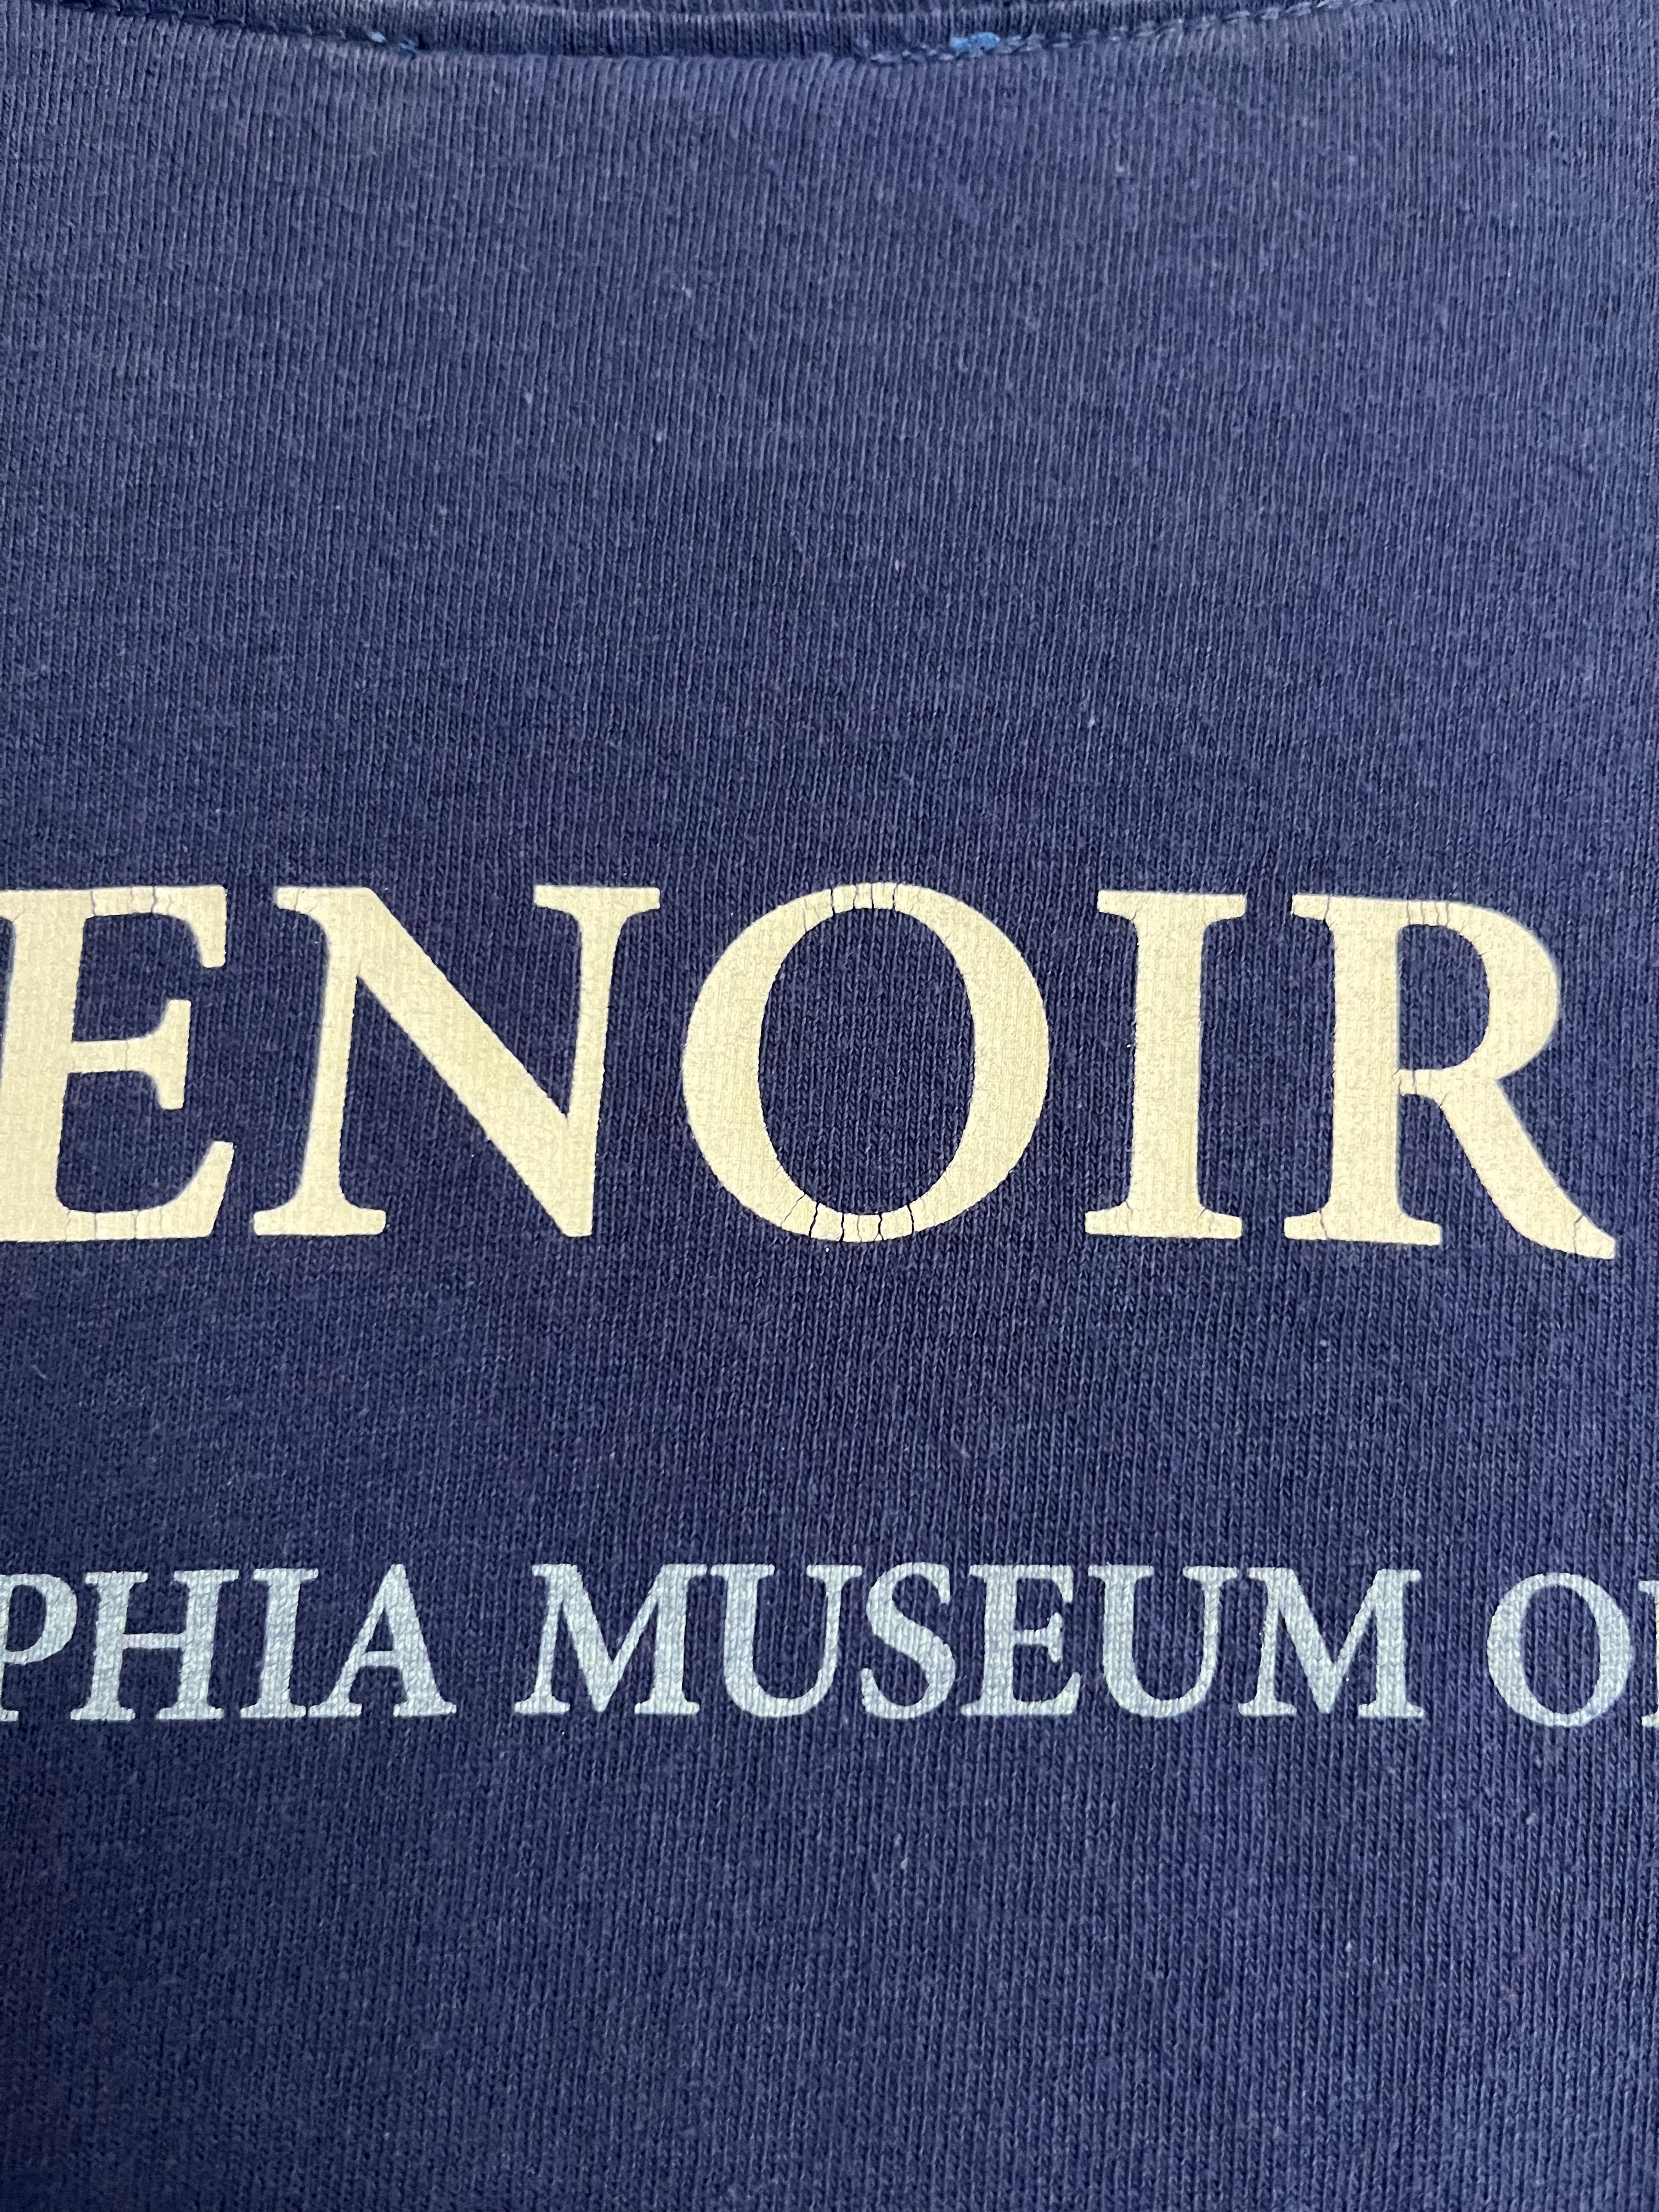 Renoir ‘The Skiff’ Philadelphia Museum of Art 90s T-Shirt - Sapphire Blue - M